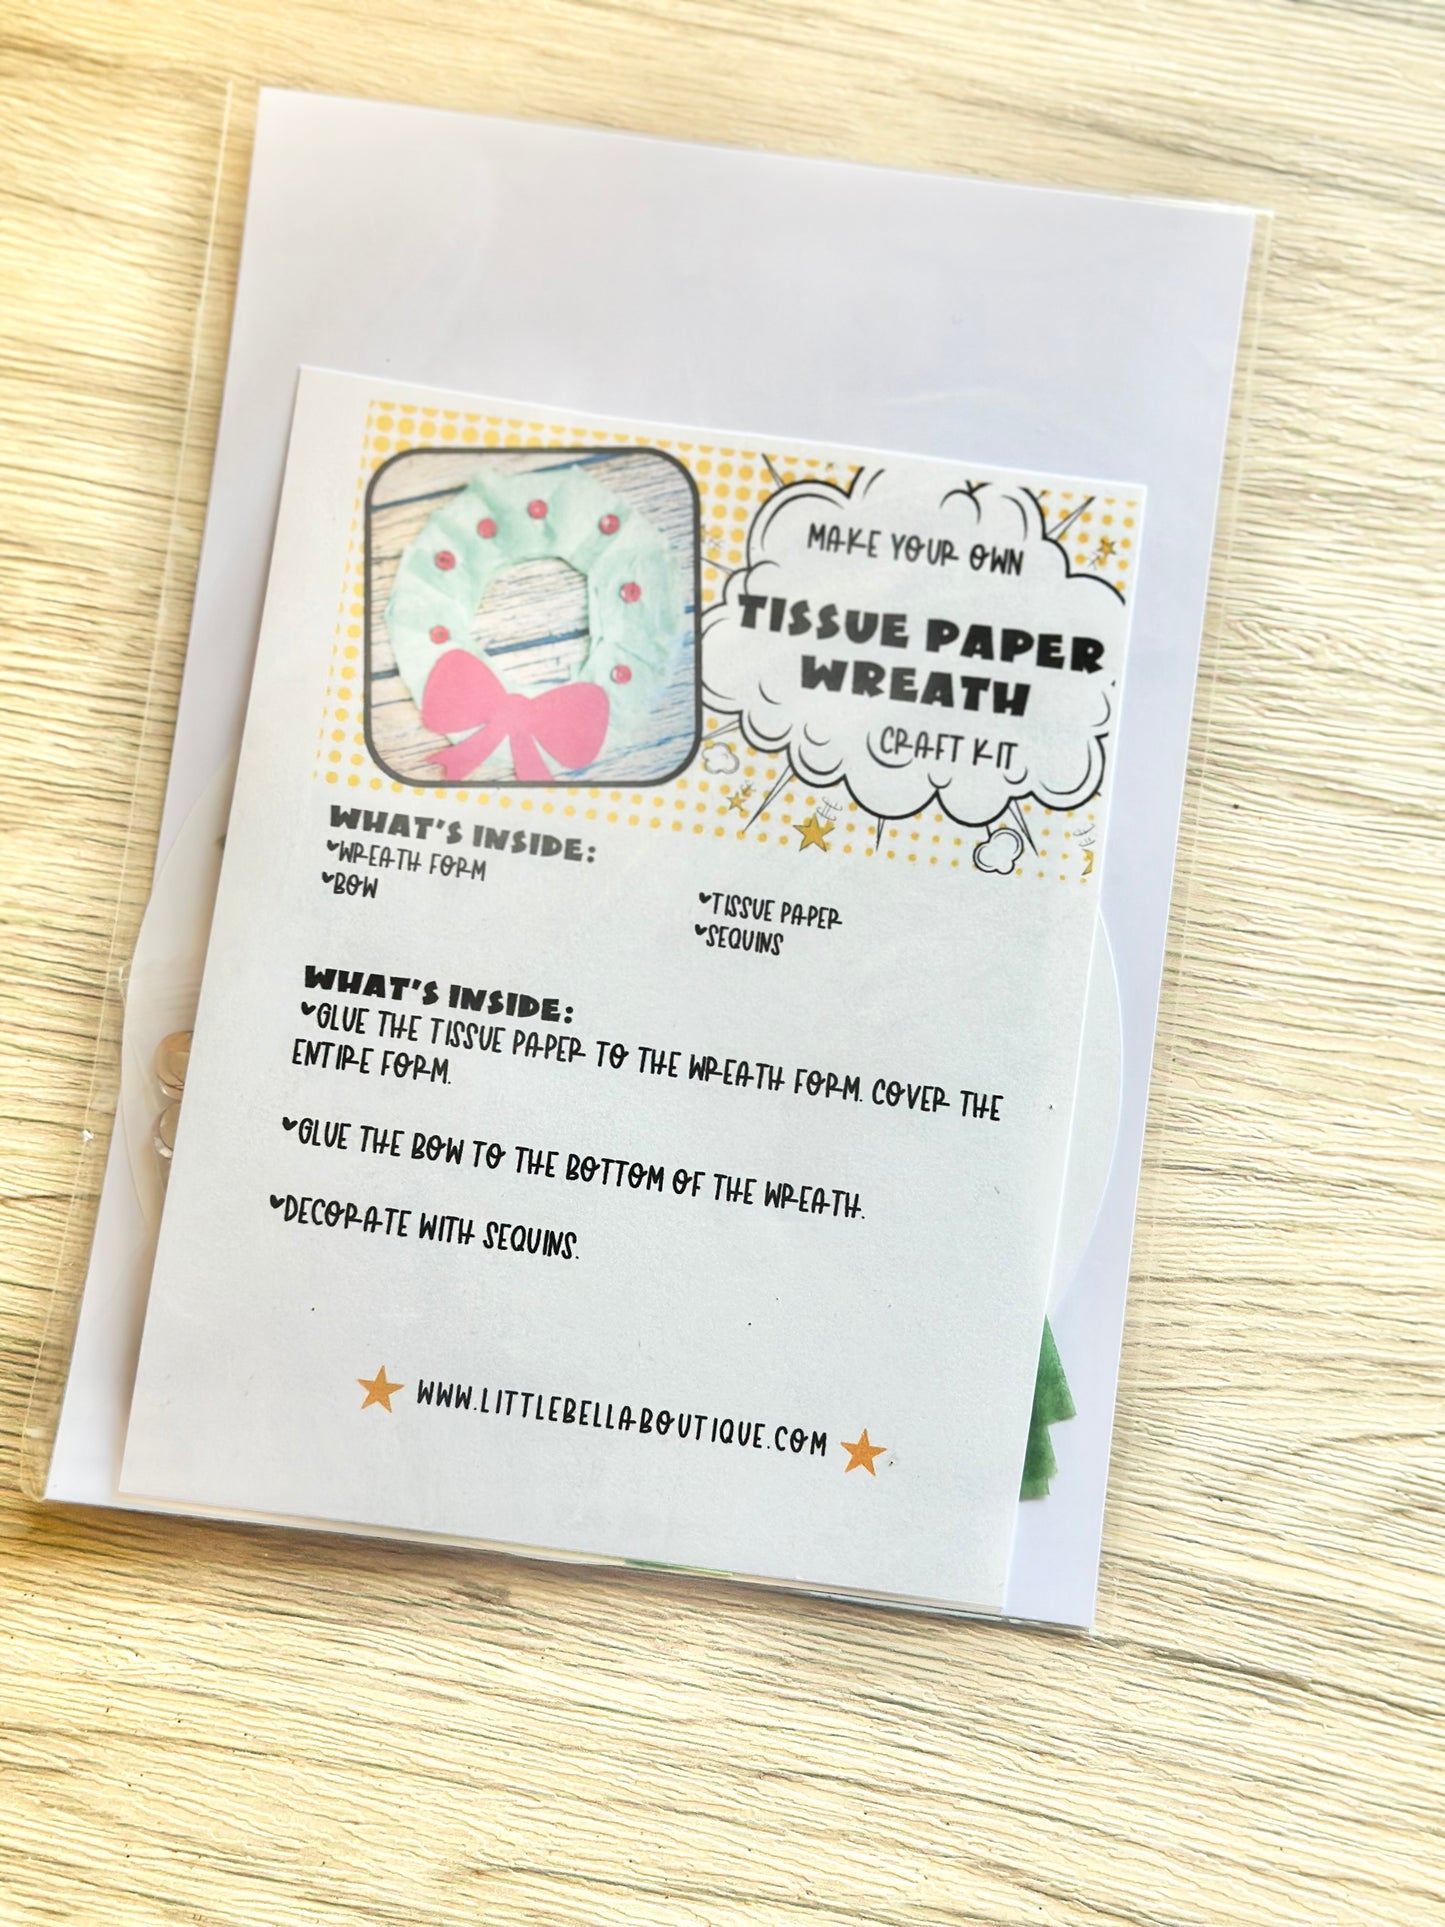 Dollar Deals: Make Your Own Tissue Paper Wreath Paper Craft Kit